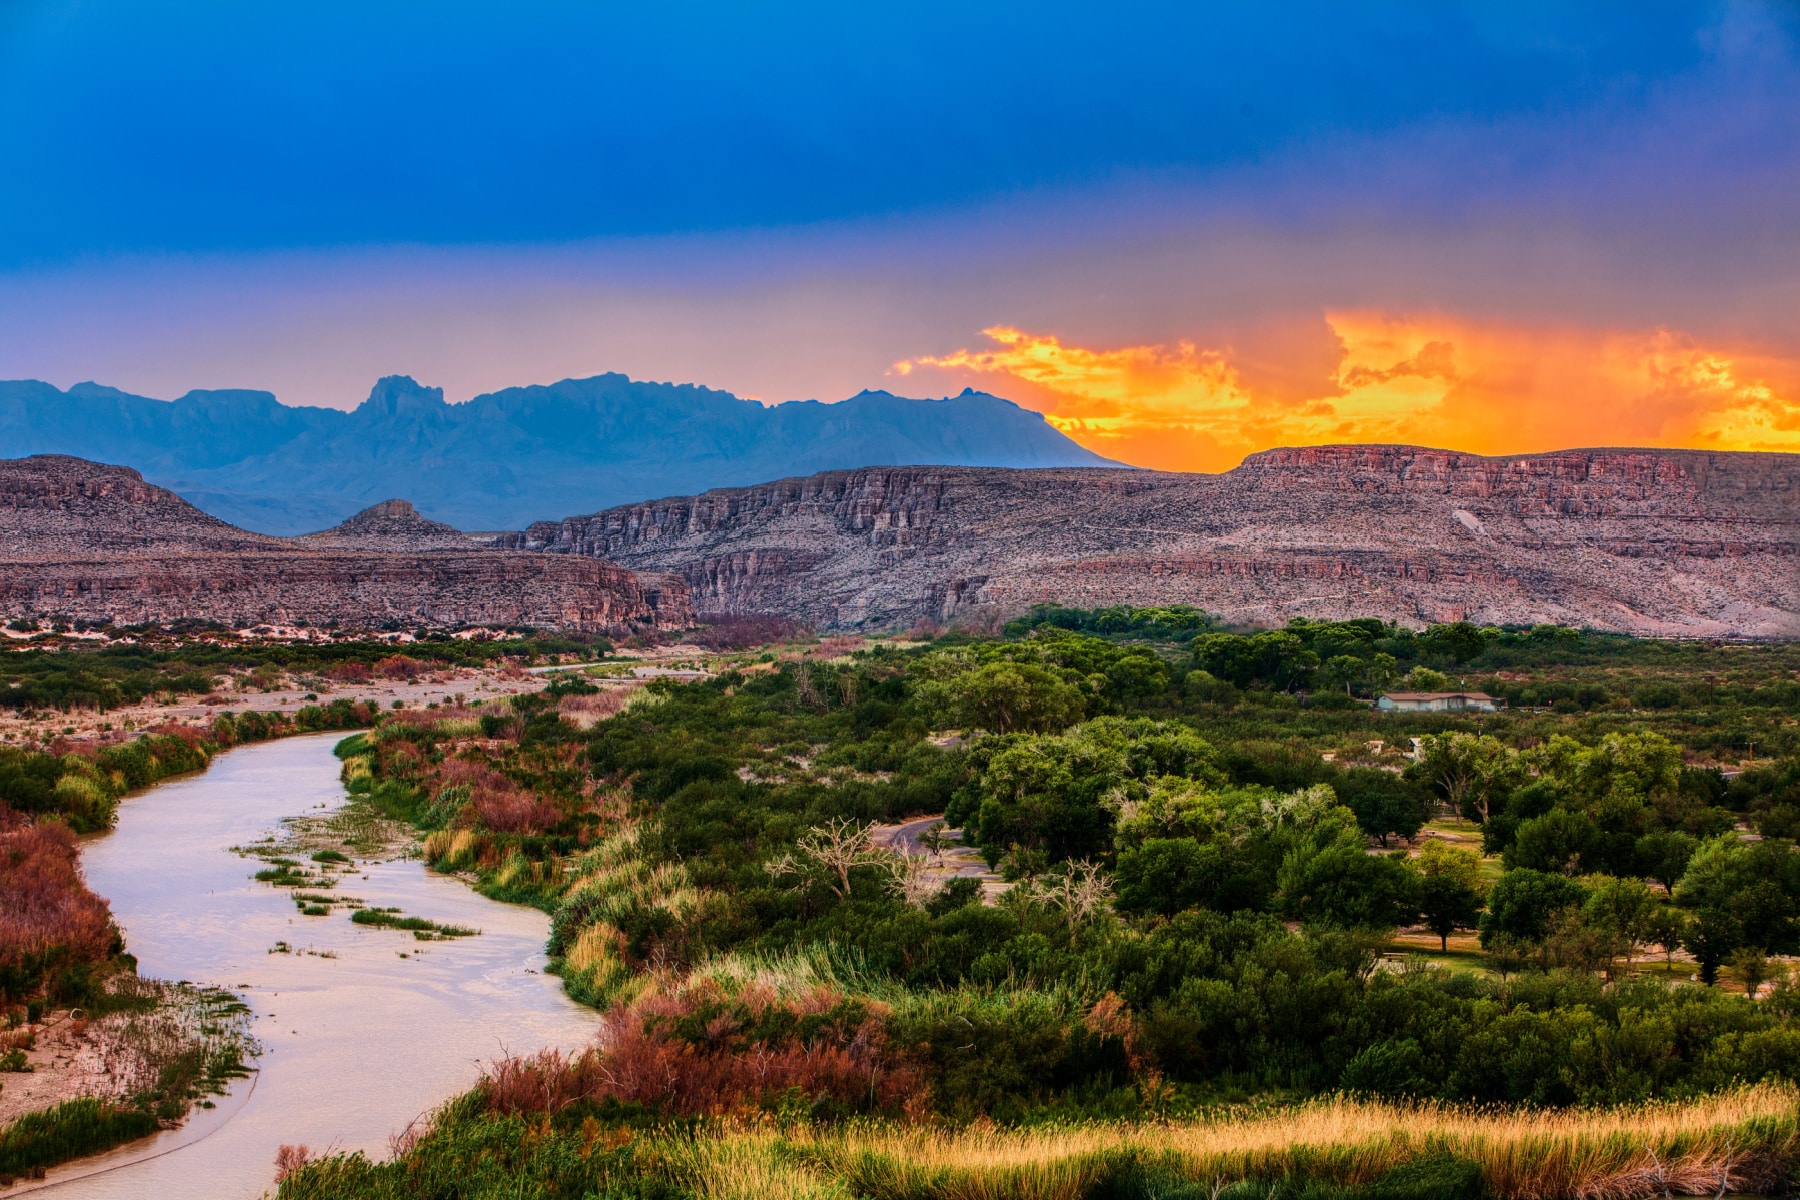 Big Bend National Park, near Mexican border, USA at sunset